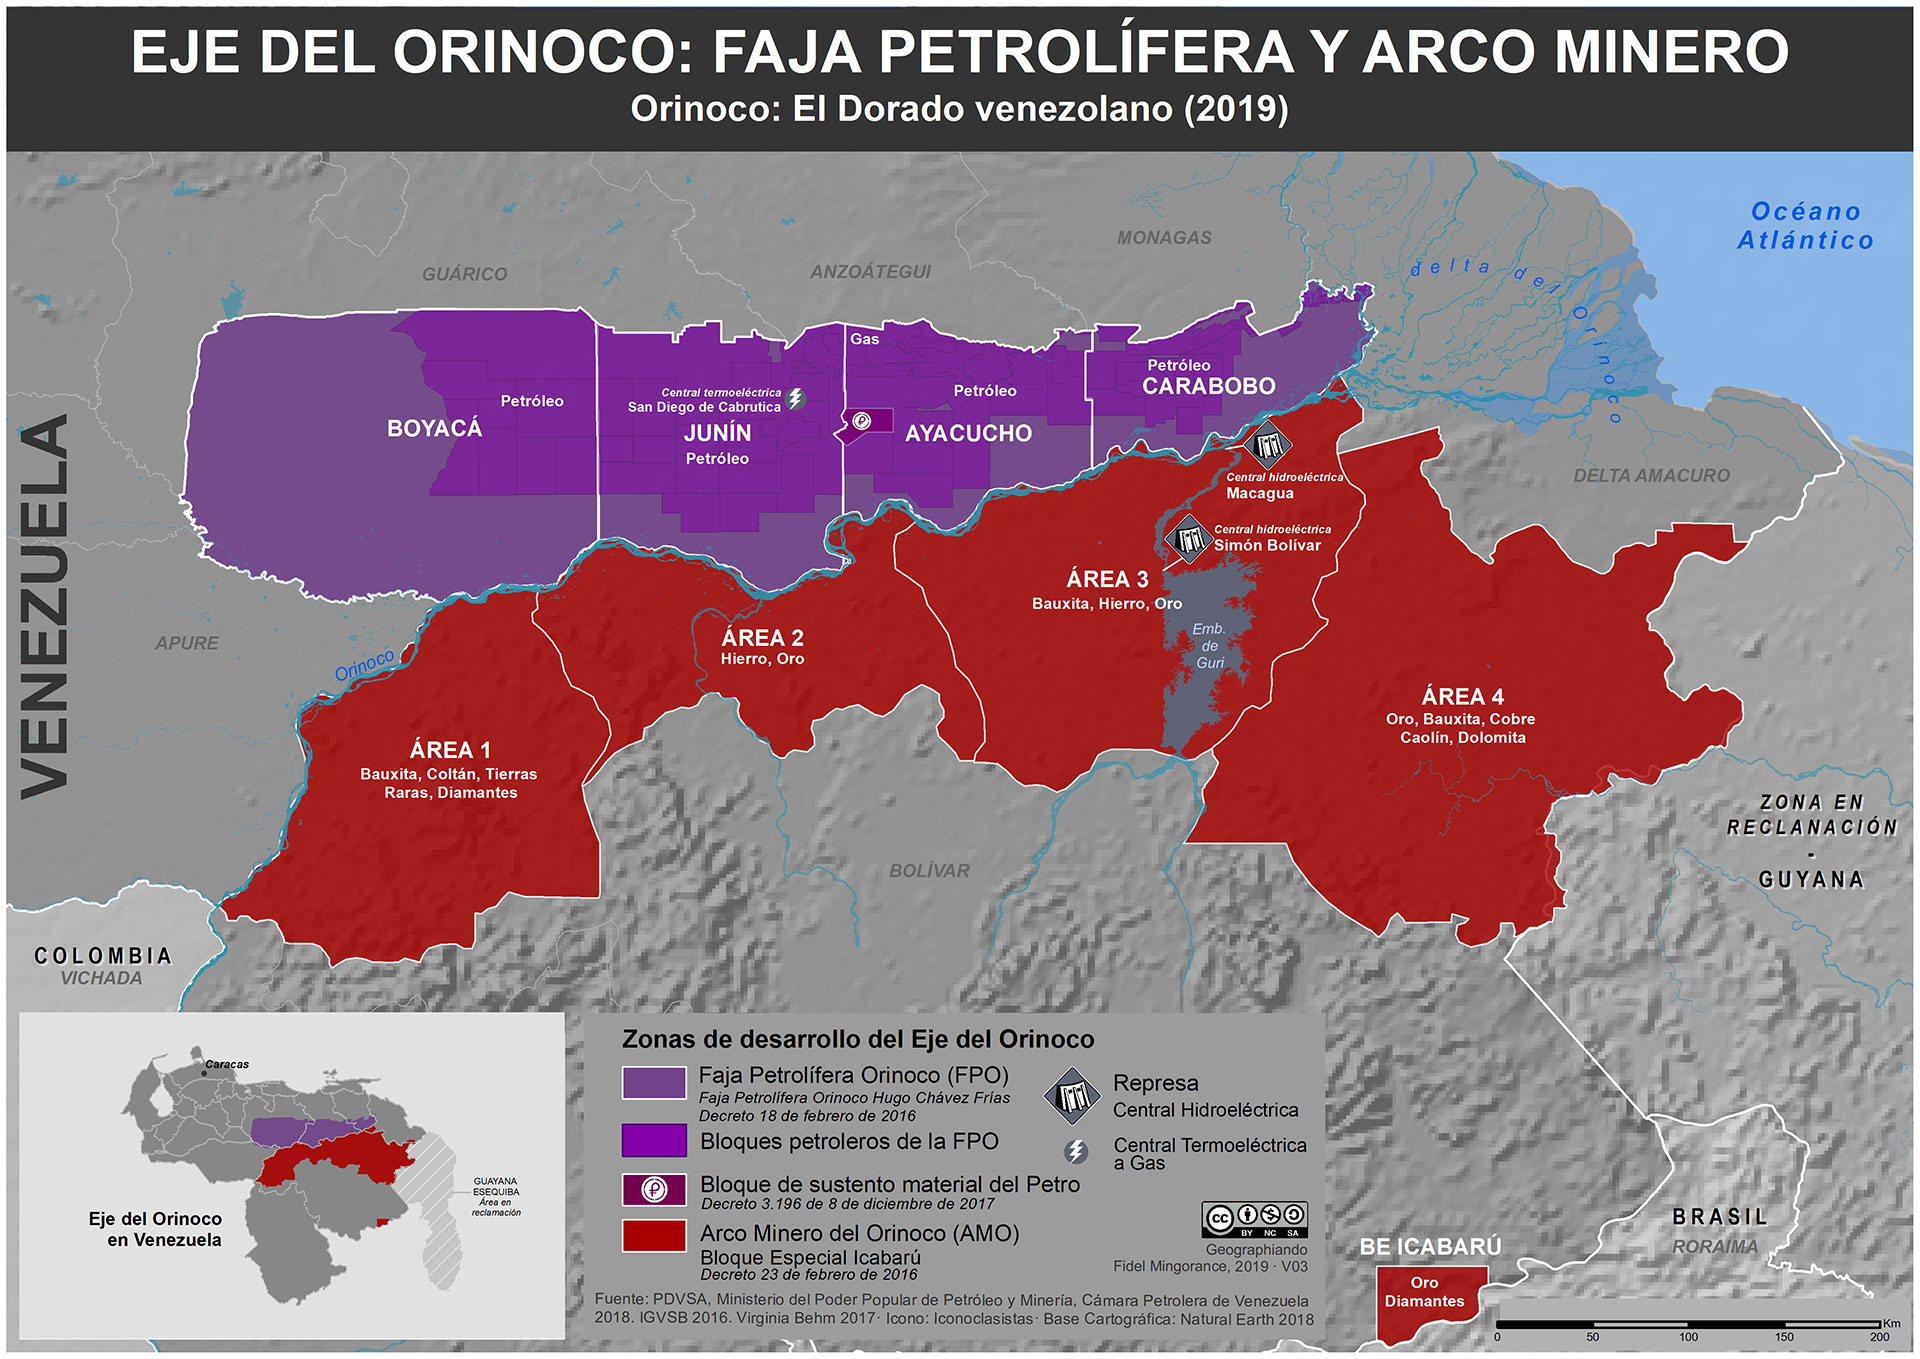 Eje del Orinoco: Faja petrolífera y Arco minero (2019)